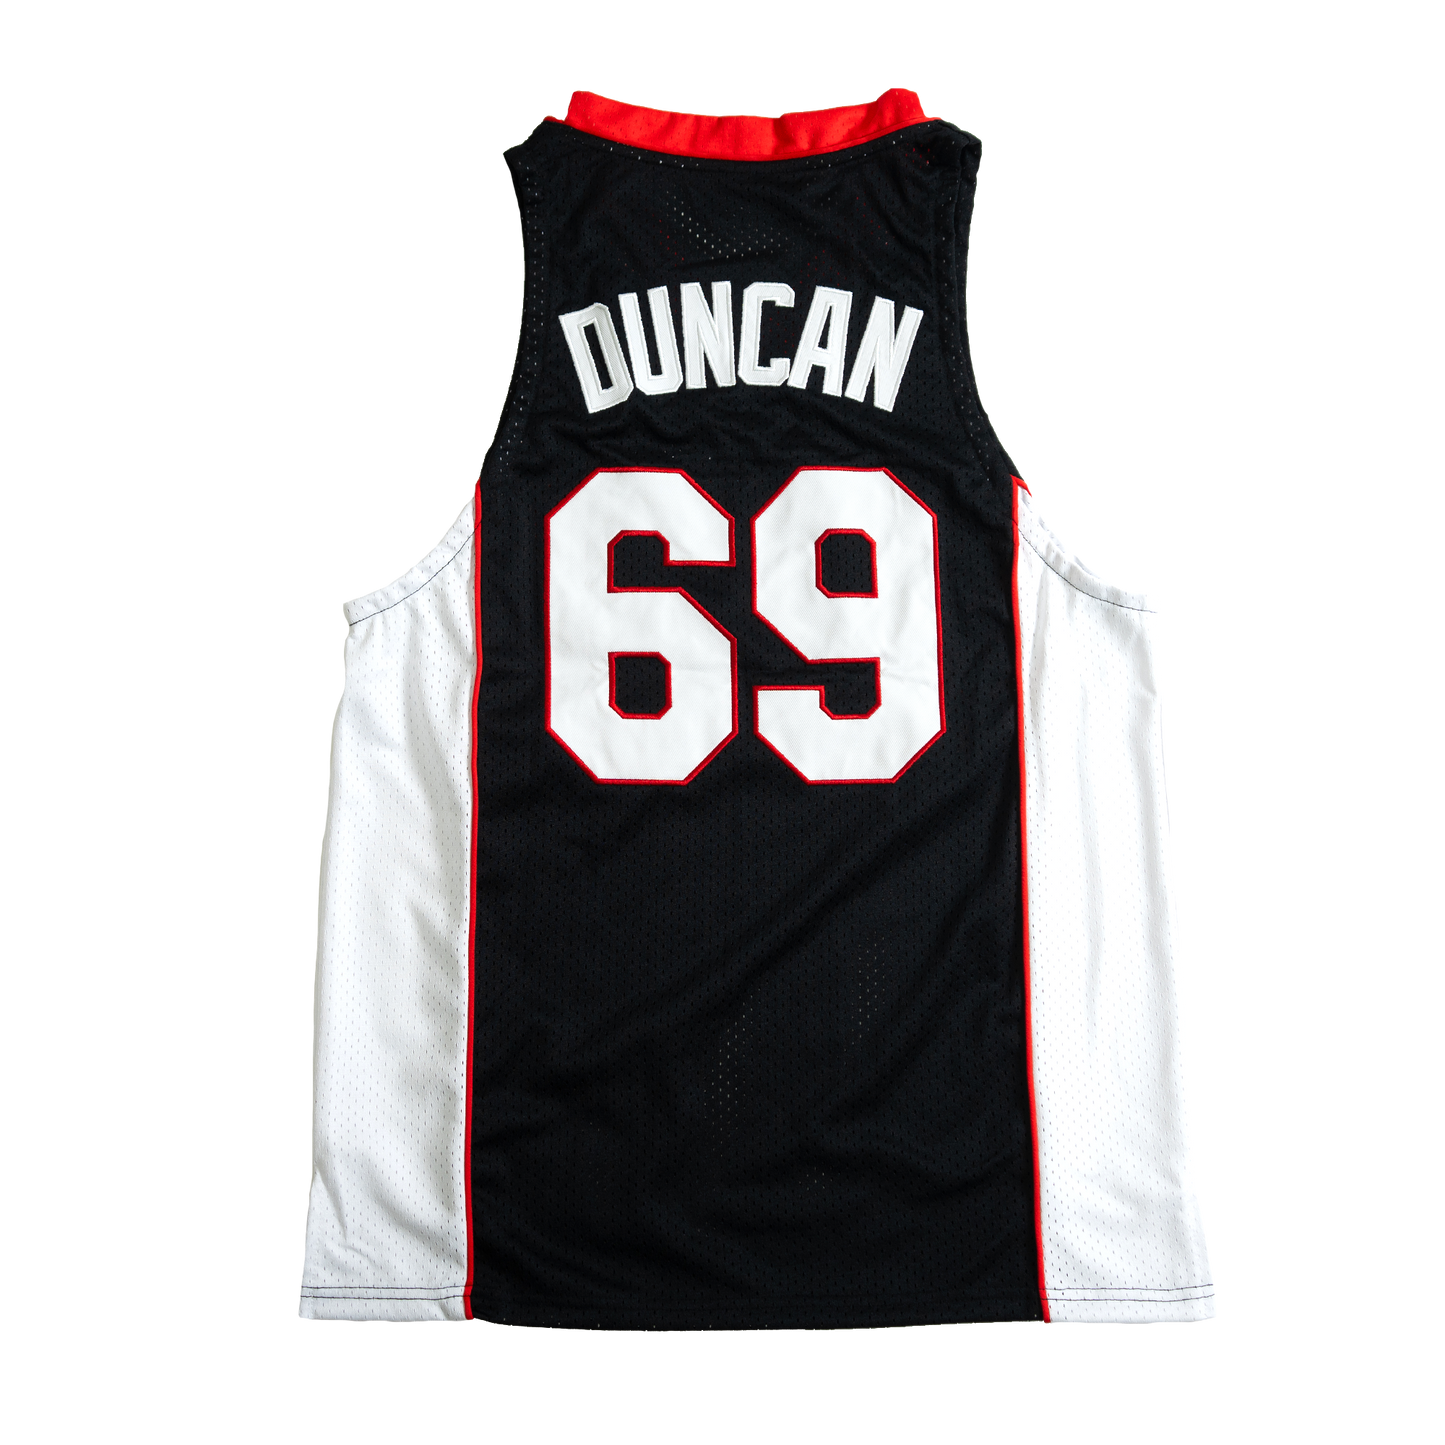 Danny Duncan Basketball Jersey